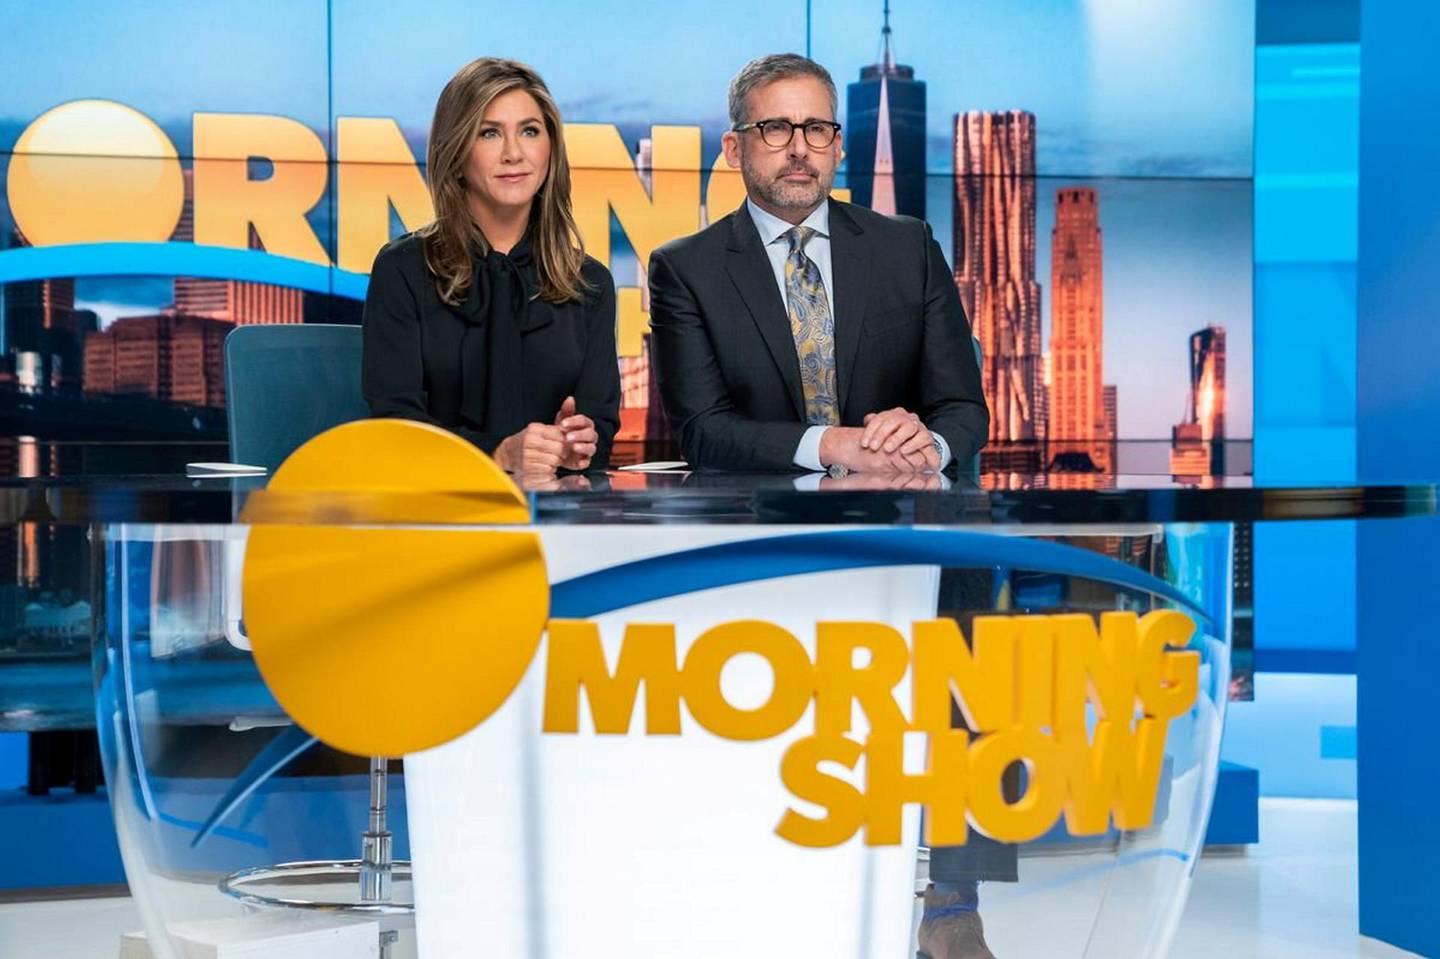 'The Morning Show' cost $150 million per season to make. (Apple TV Plus)